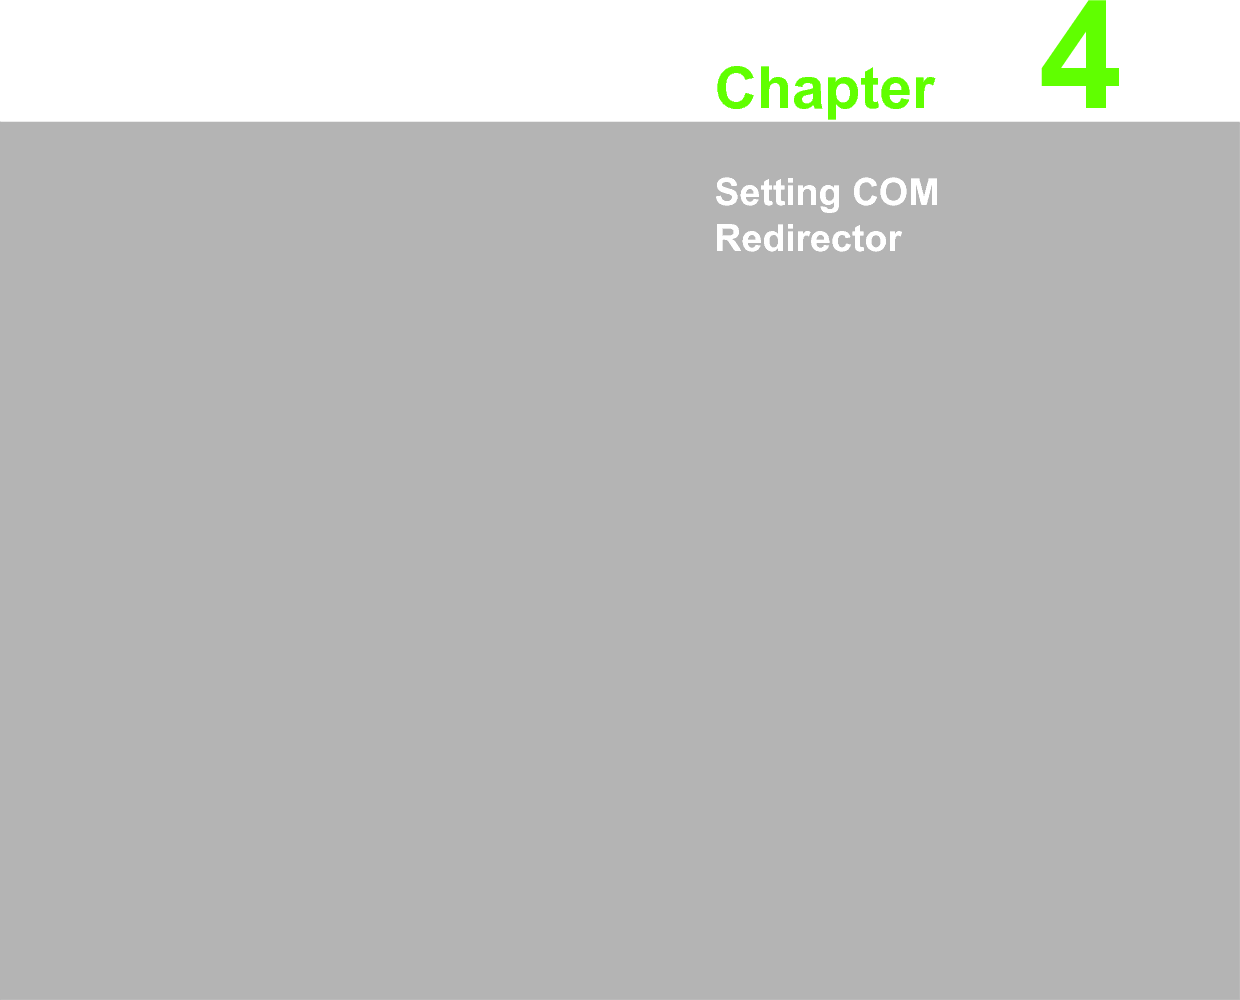 Chapter 44Setting COM Redirector